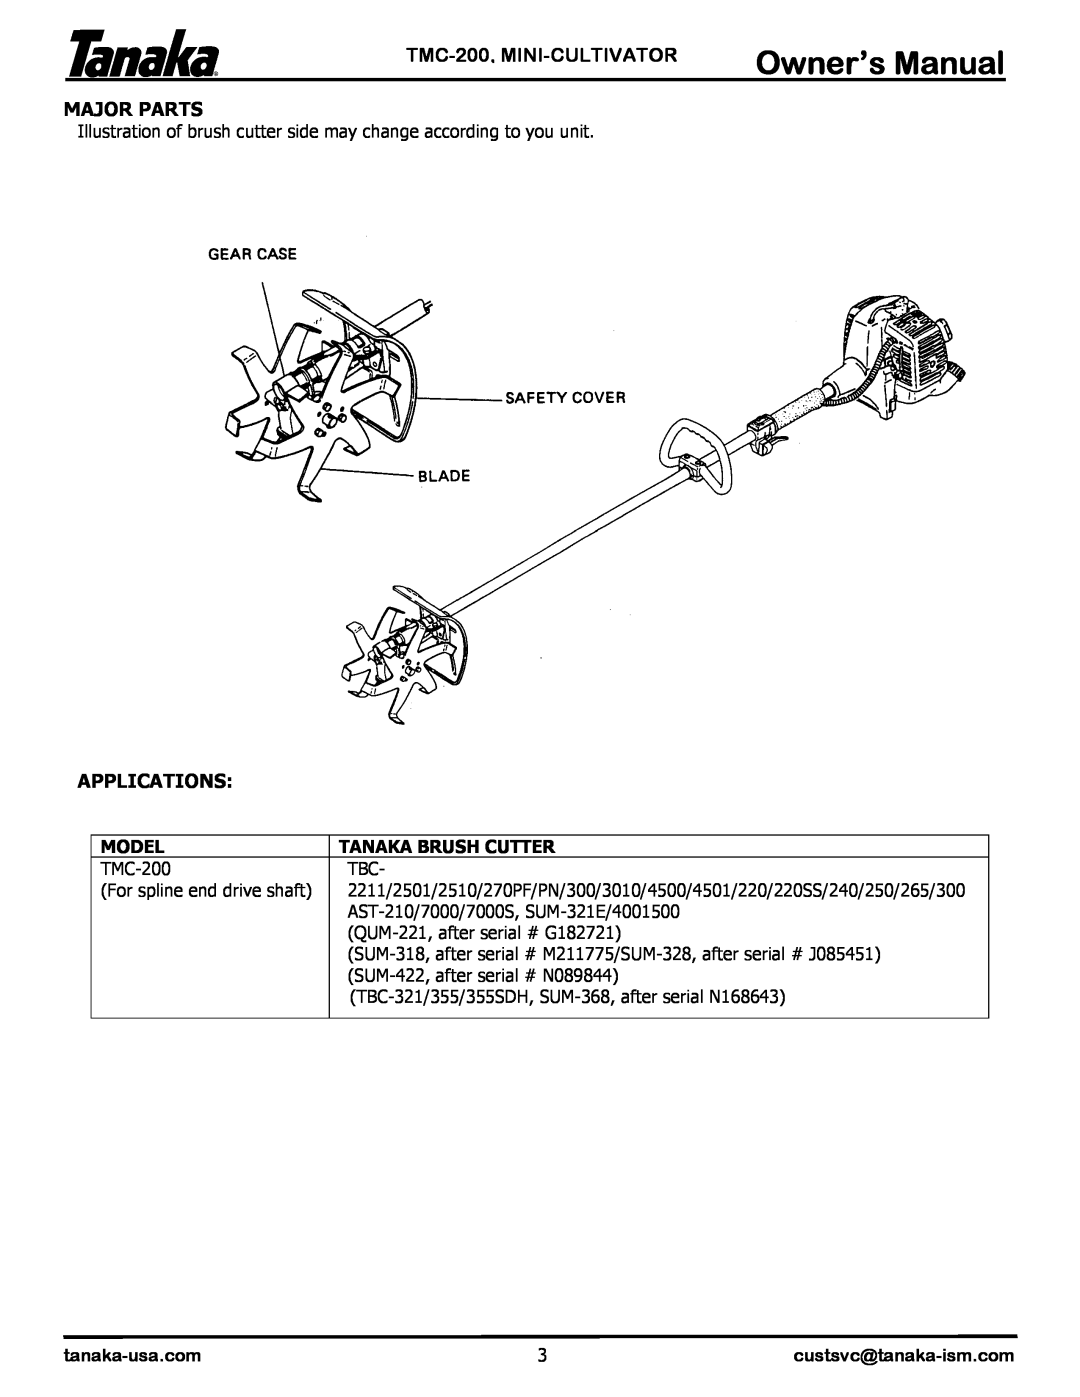 Tanaka manual TMC-200, MINI-CULTIVATOR, Major Parts, Applications, Model, Tanaka Brush Cutter 